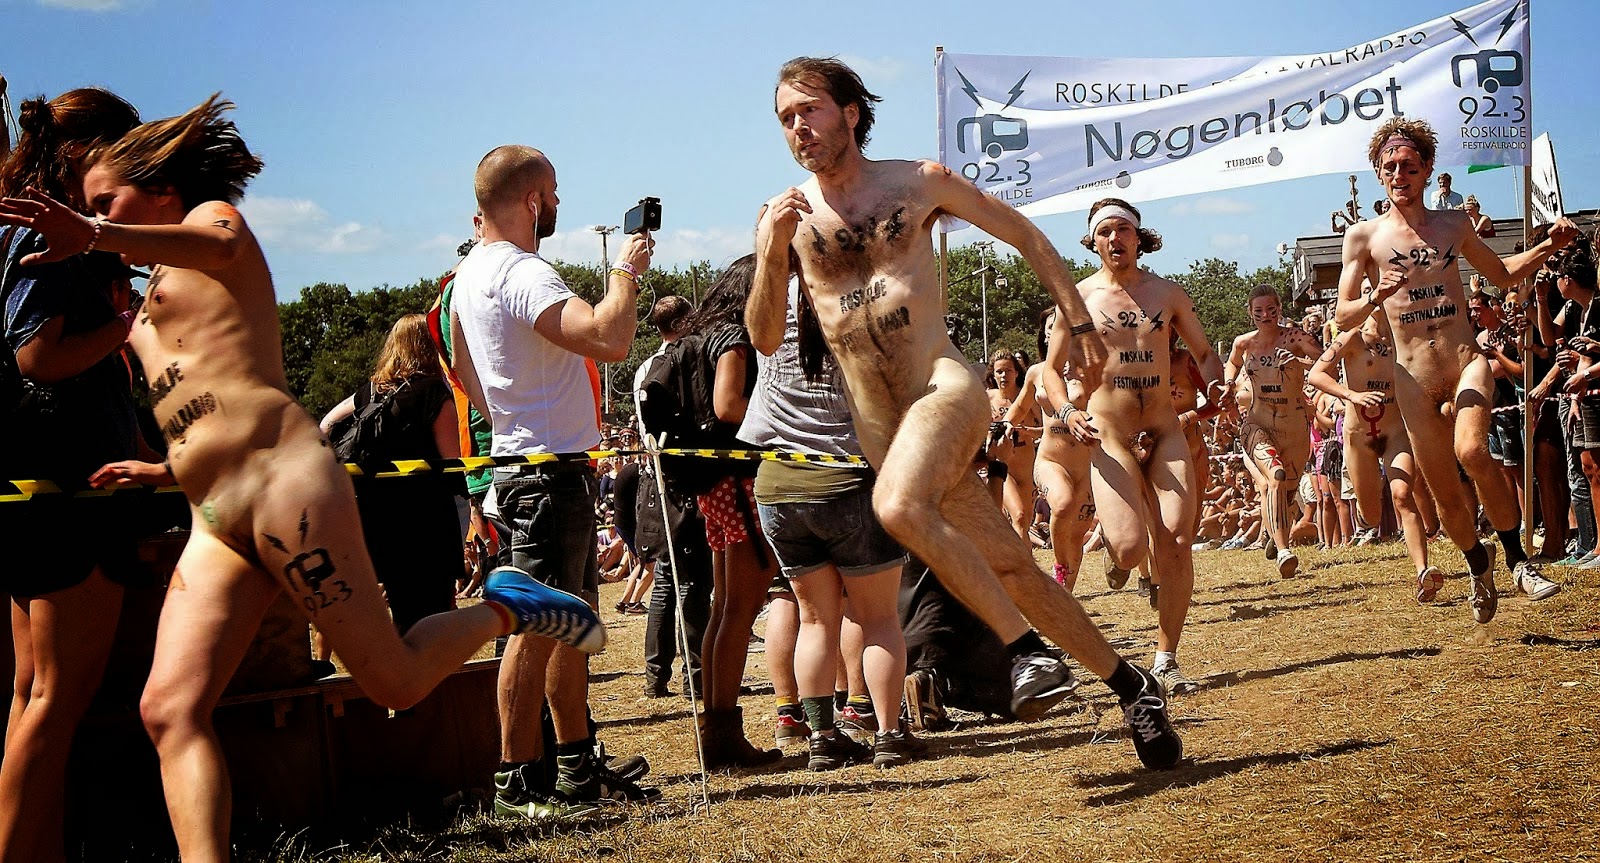 https://www.nudismlife.com/galleries/public_nudity/roskilde_naked_race/2013_roskilde_naked_run/2013_roskilde_naked_runners_018.jpg